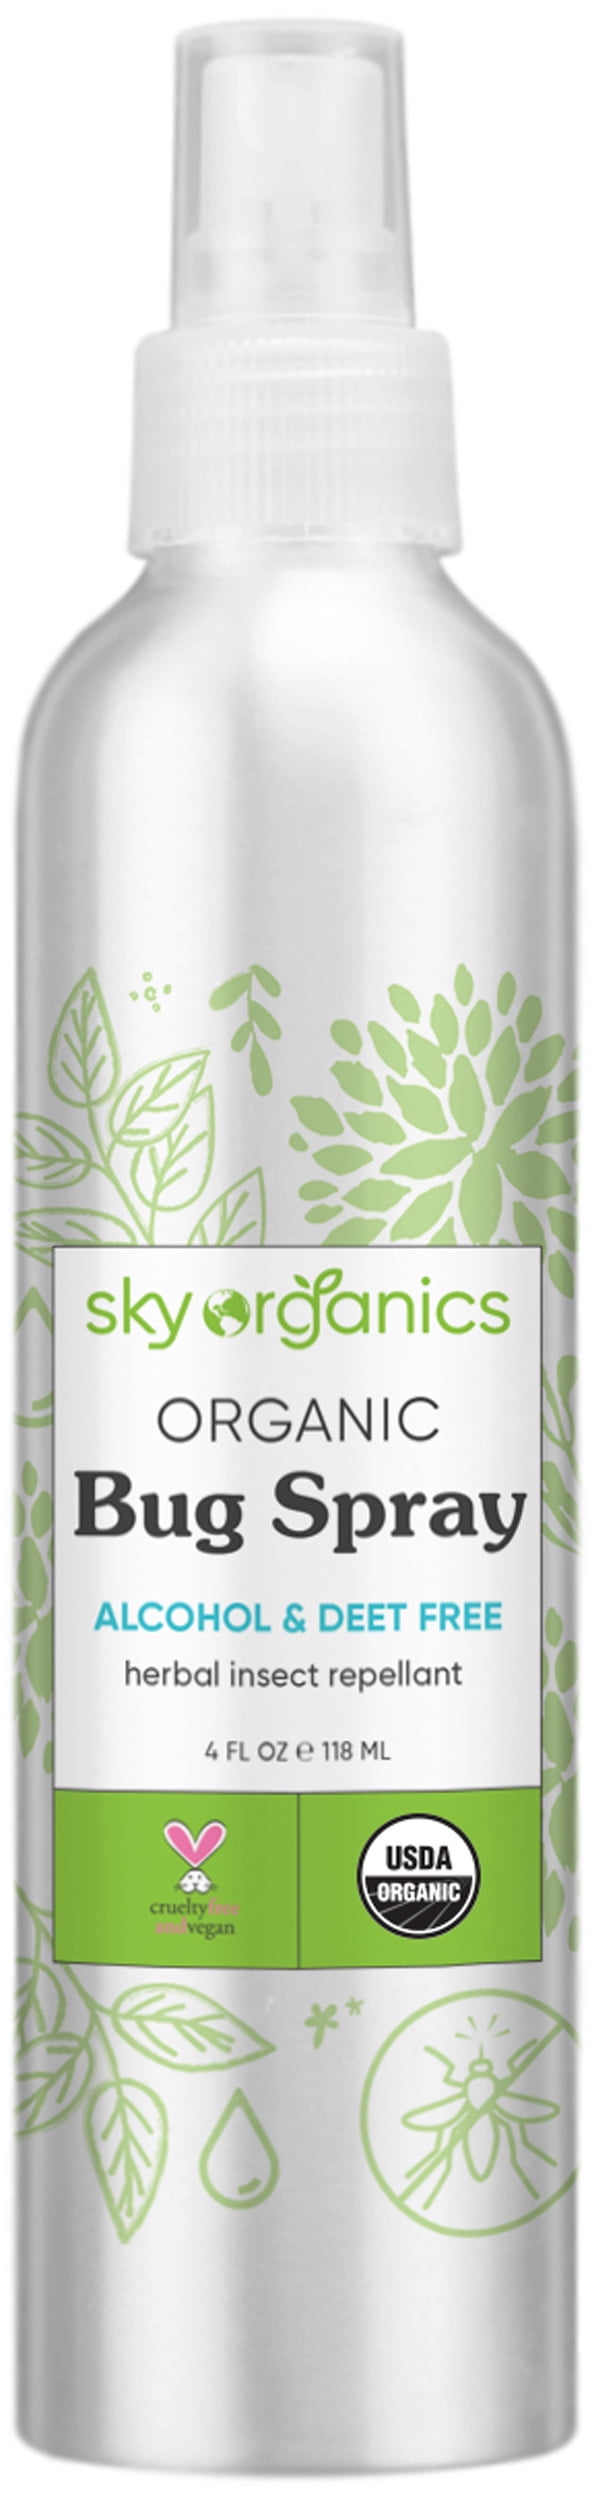 Sky Organics Organic Bug Spray for Body to Protect & Repel, 4 oz